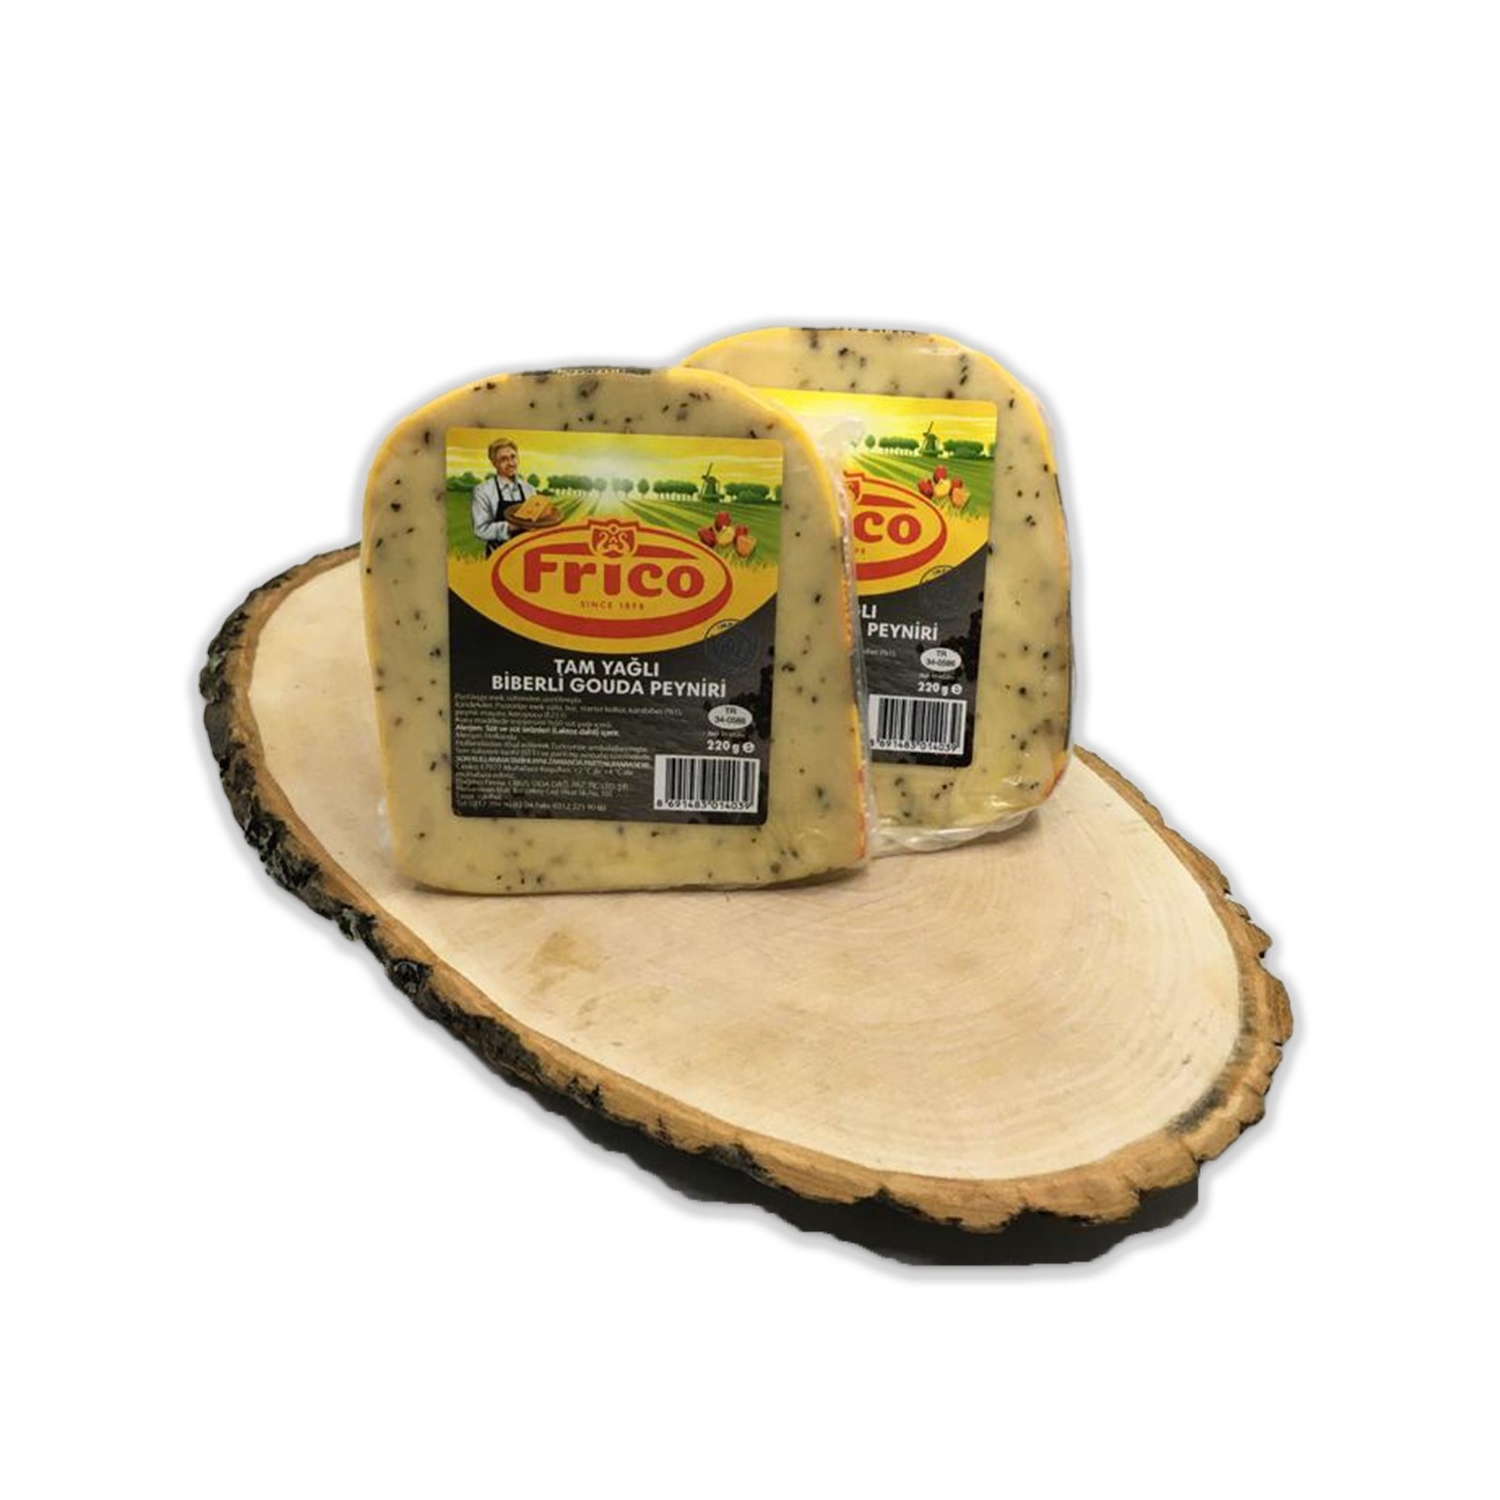 Frıco Biberli Gouda Peyniri 280 - 310 Gr